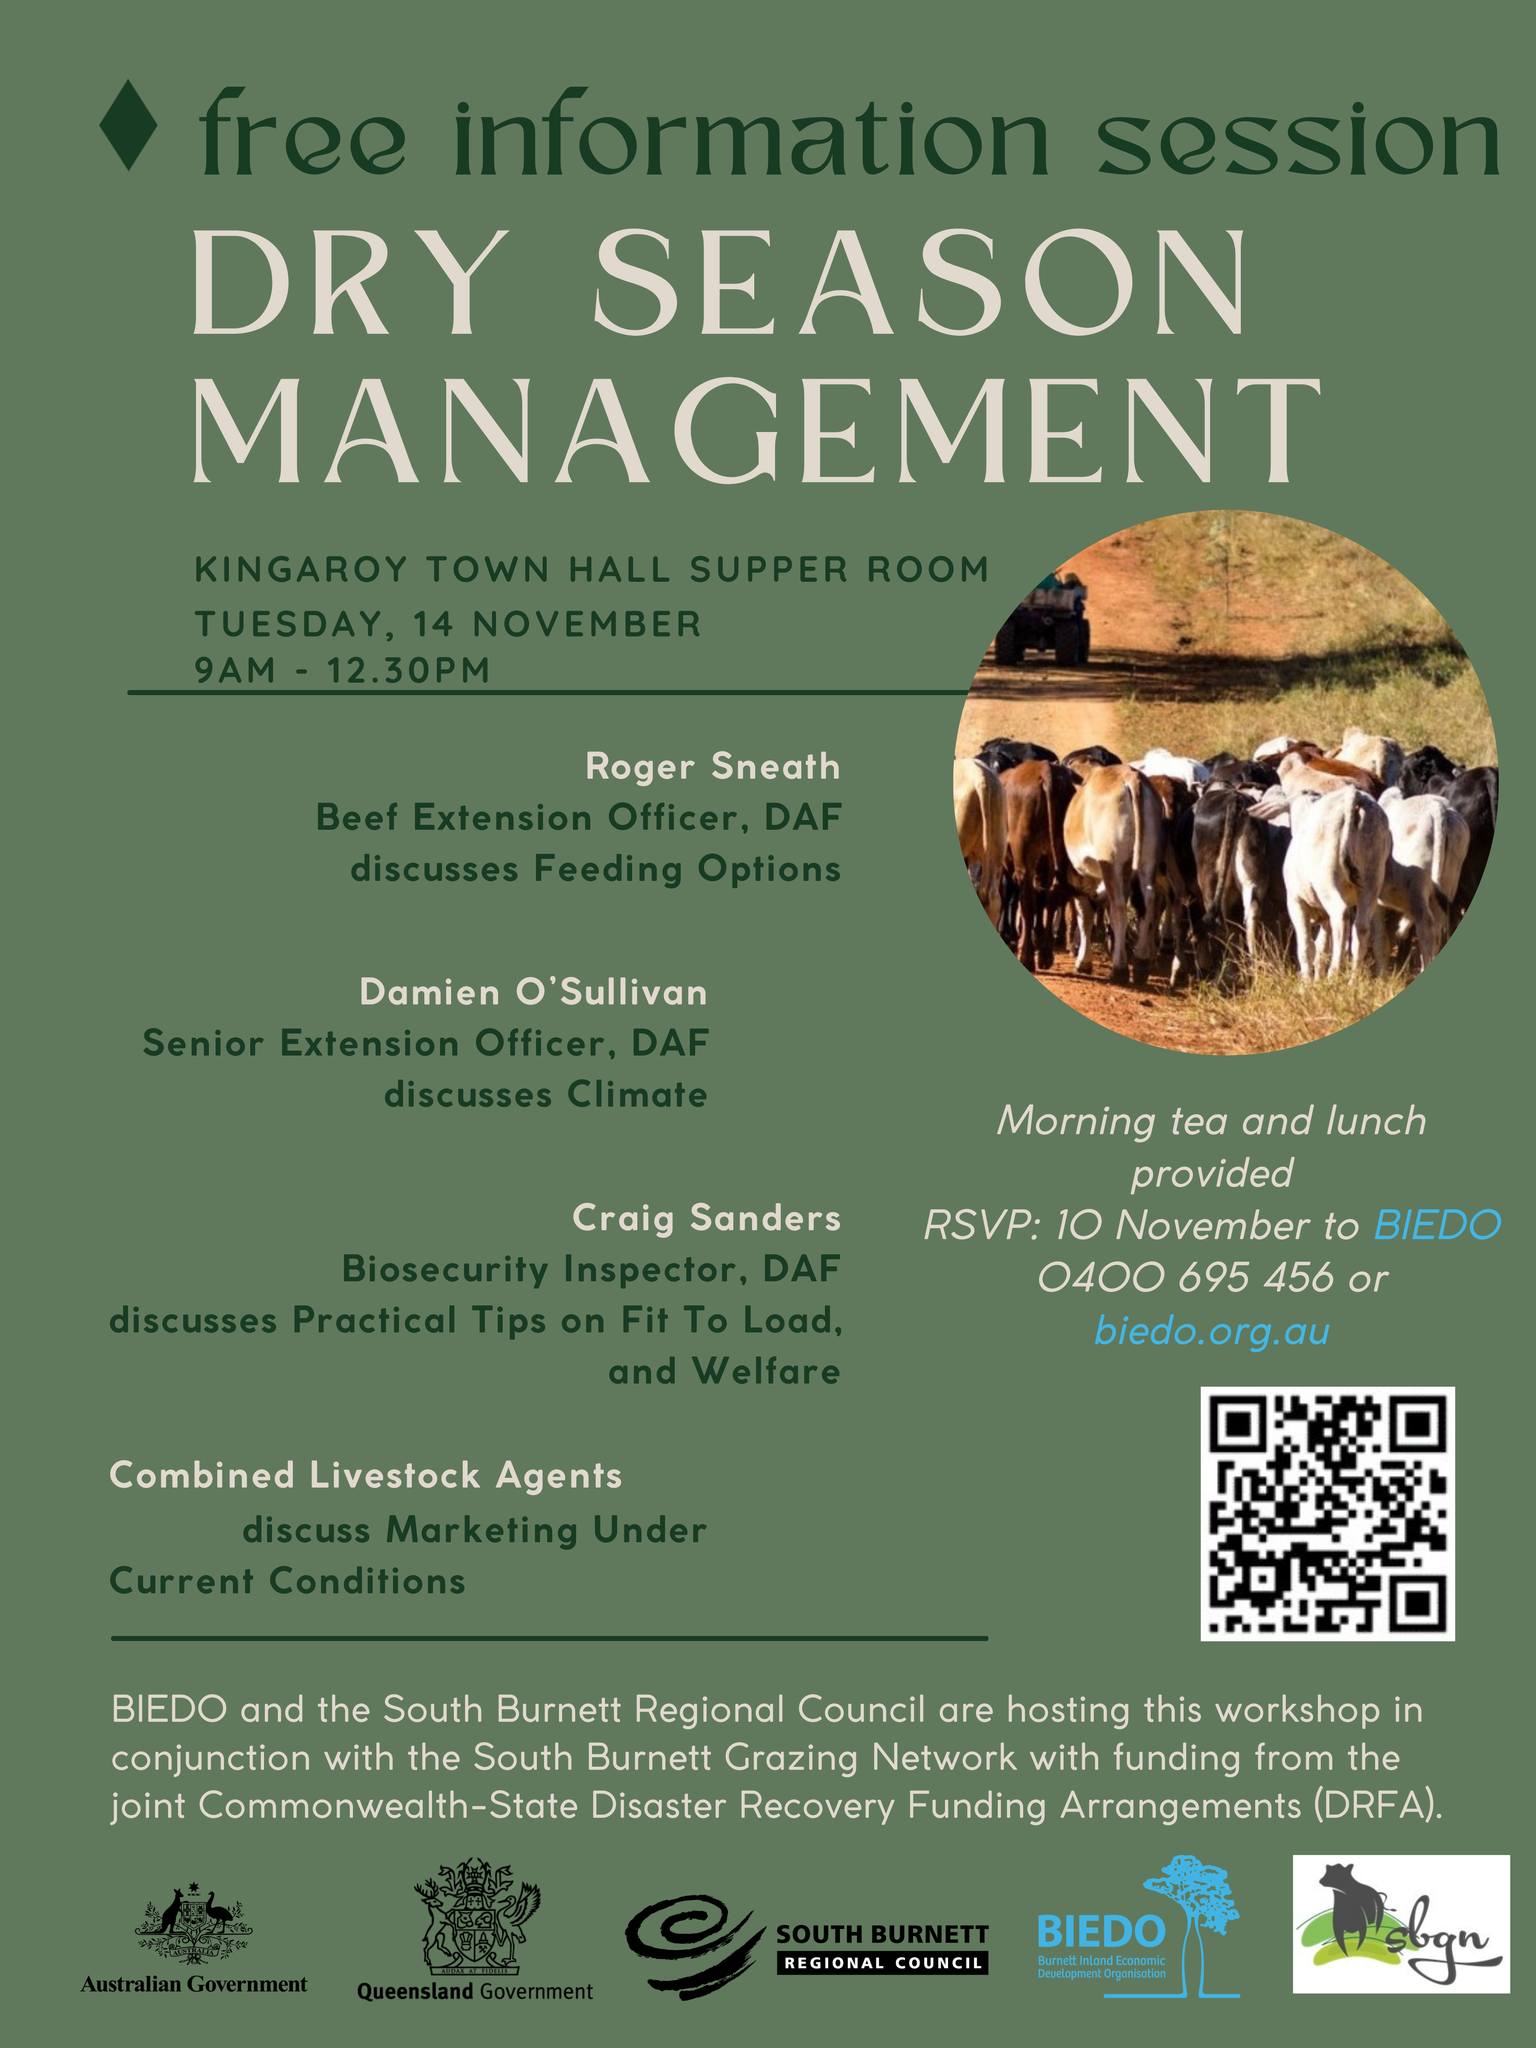 Dry season management information session, Kingaroy, 14 November